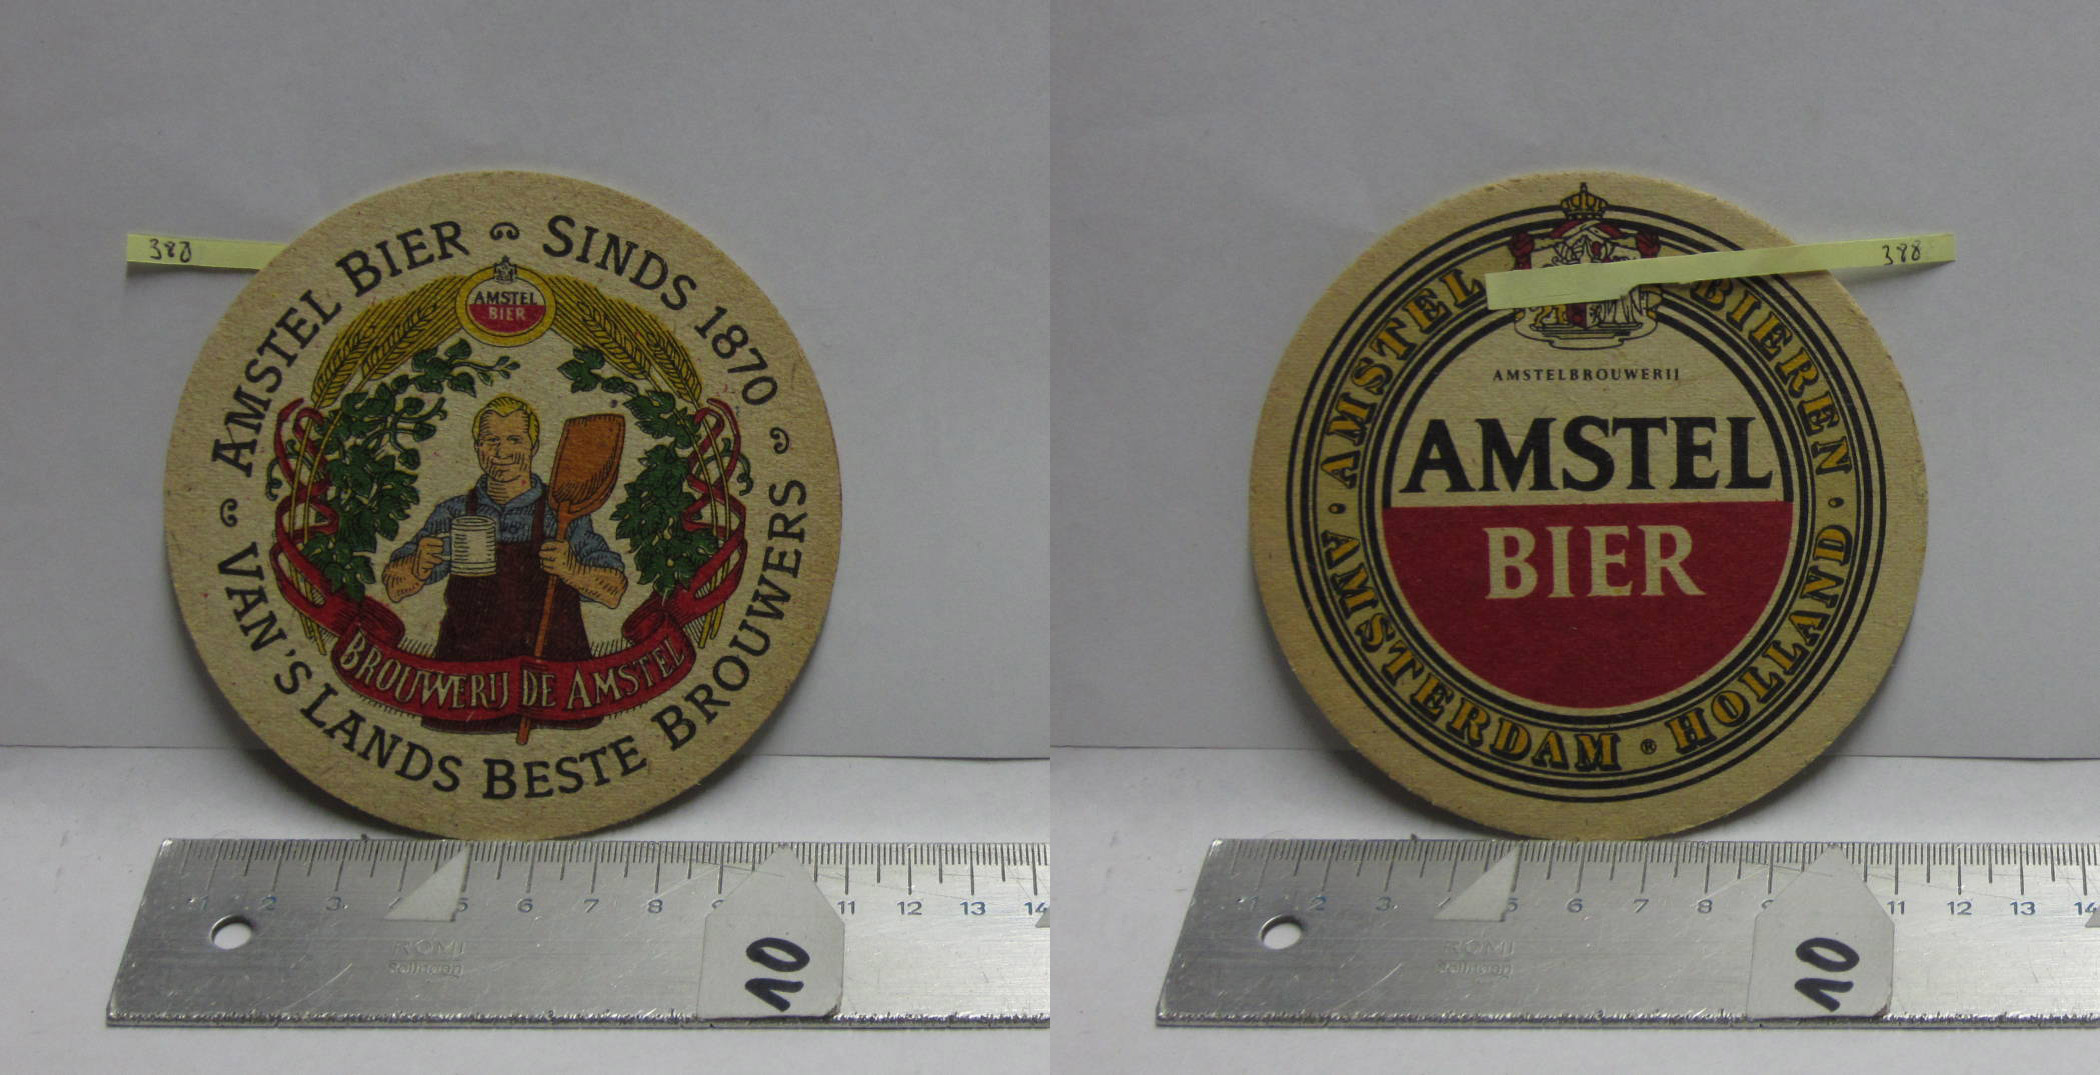 388 - Amstel Bier